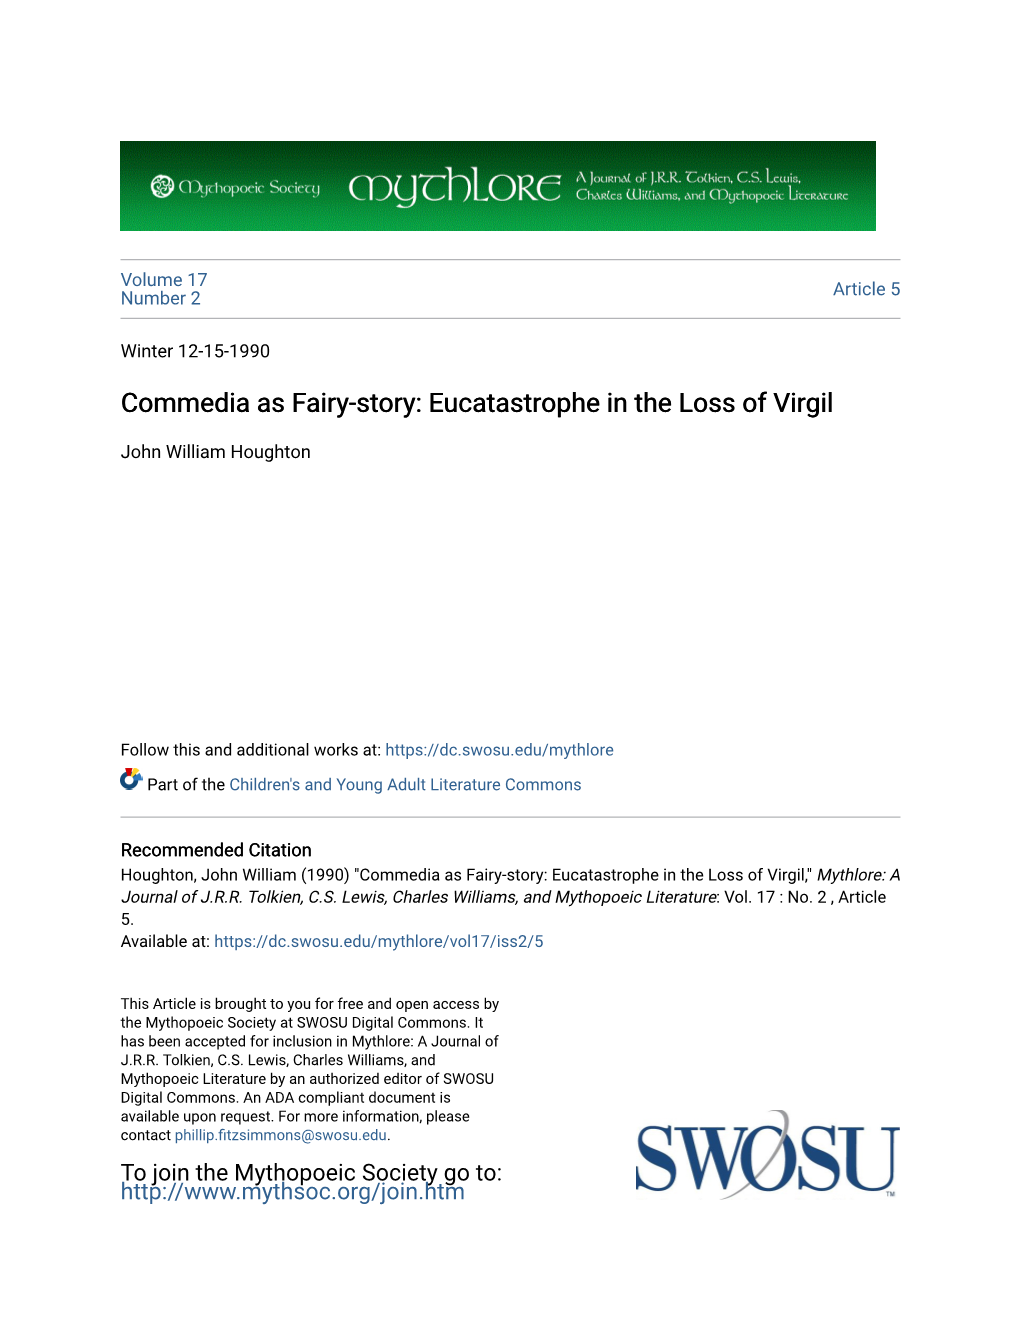 Eucatastrophe in the Loss of Virgil